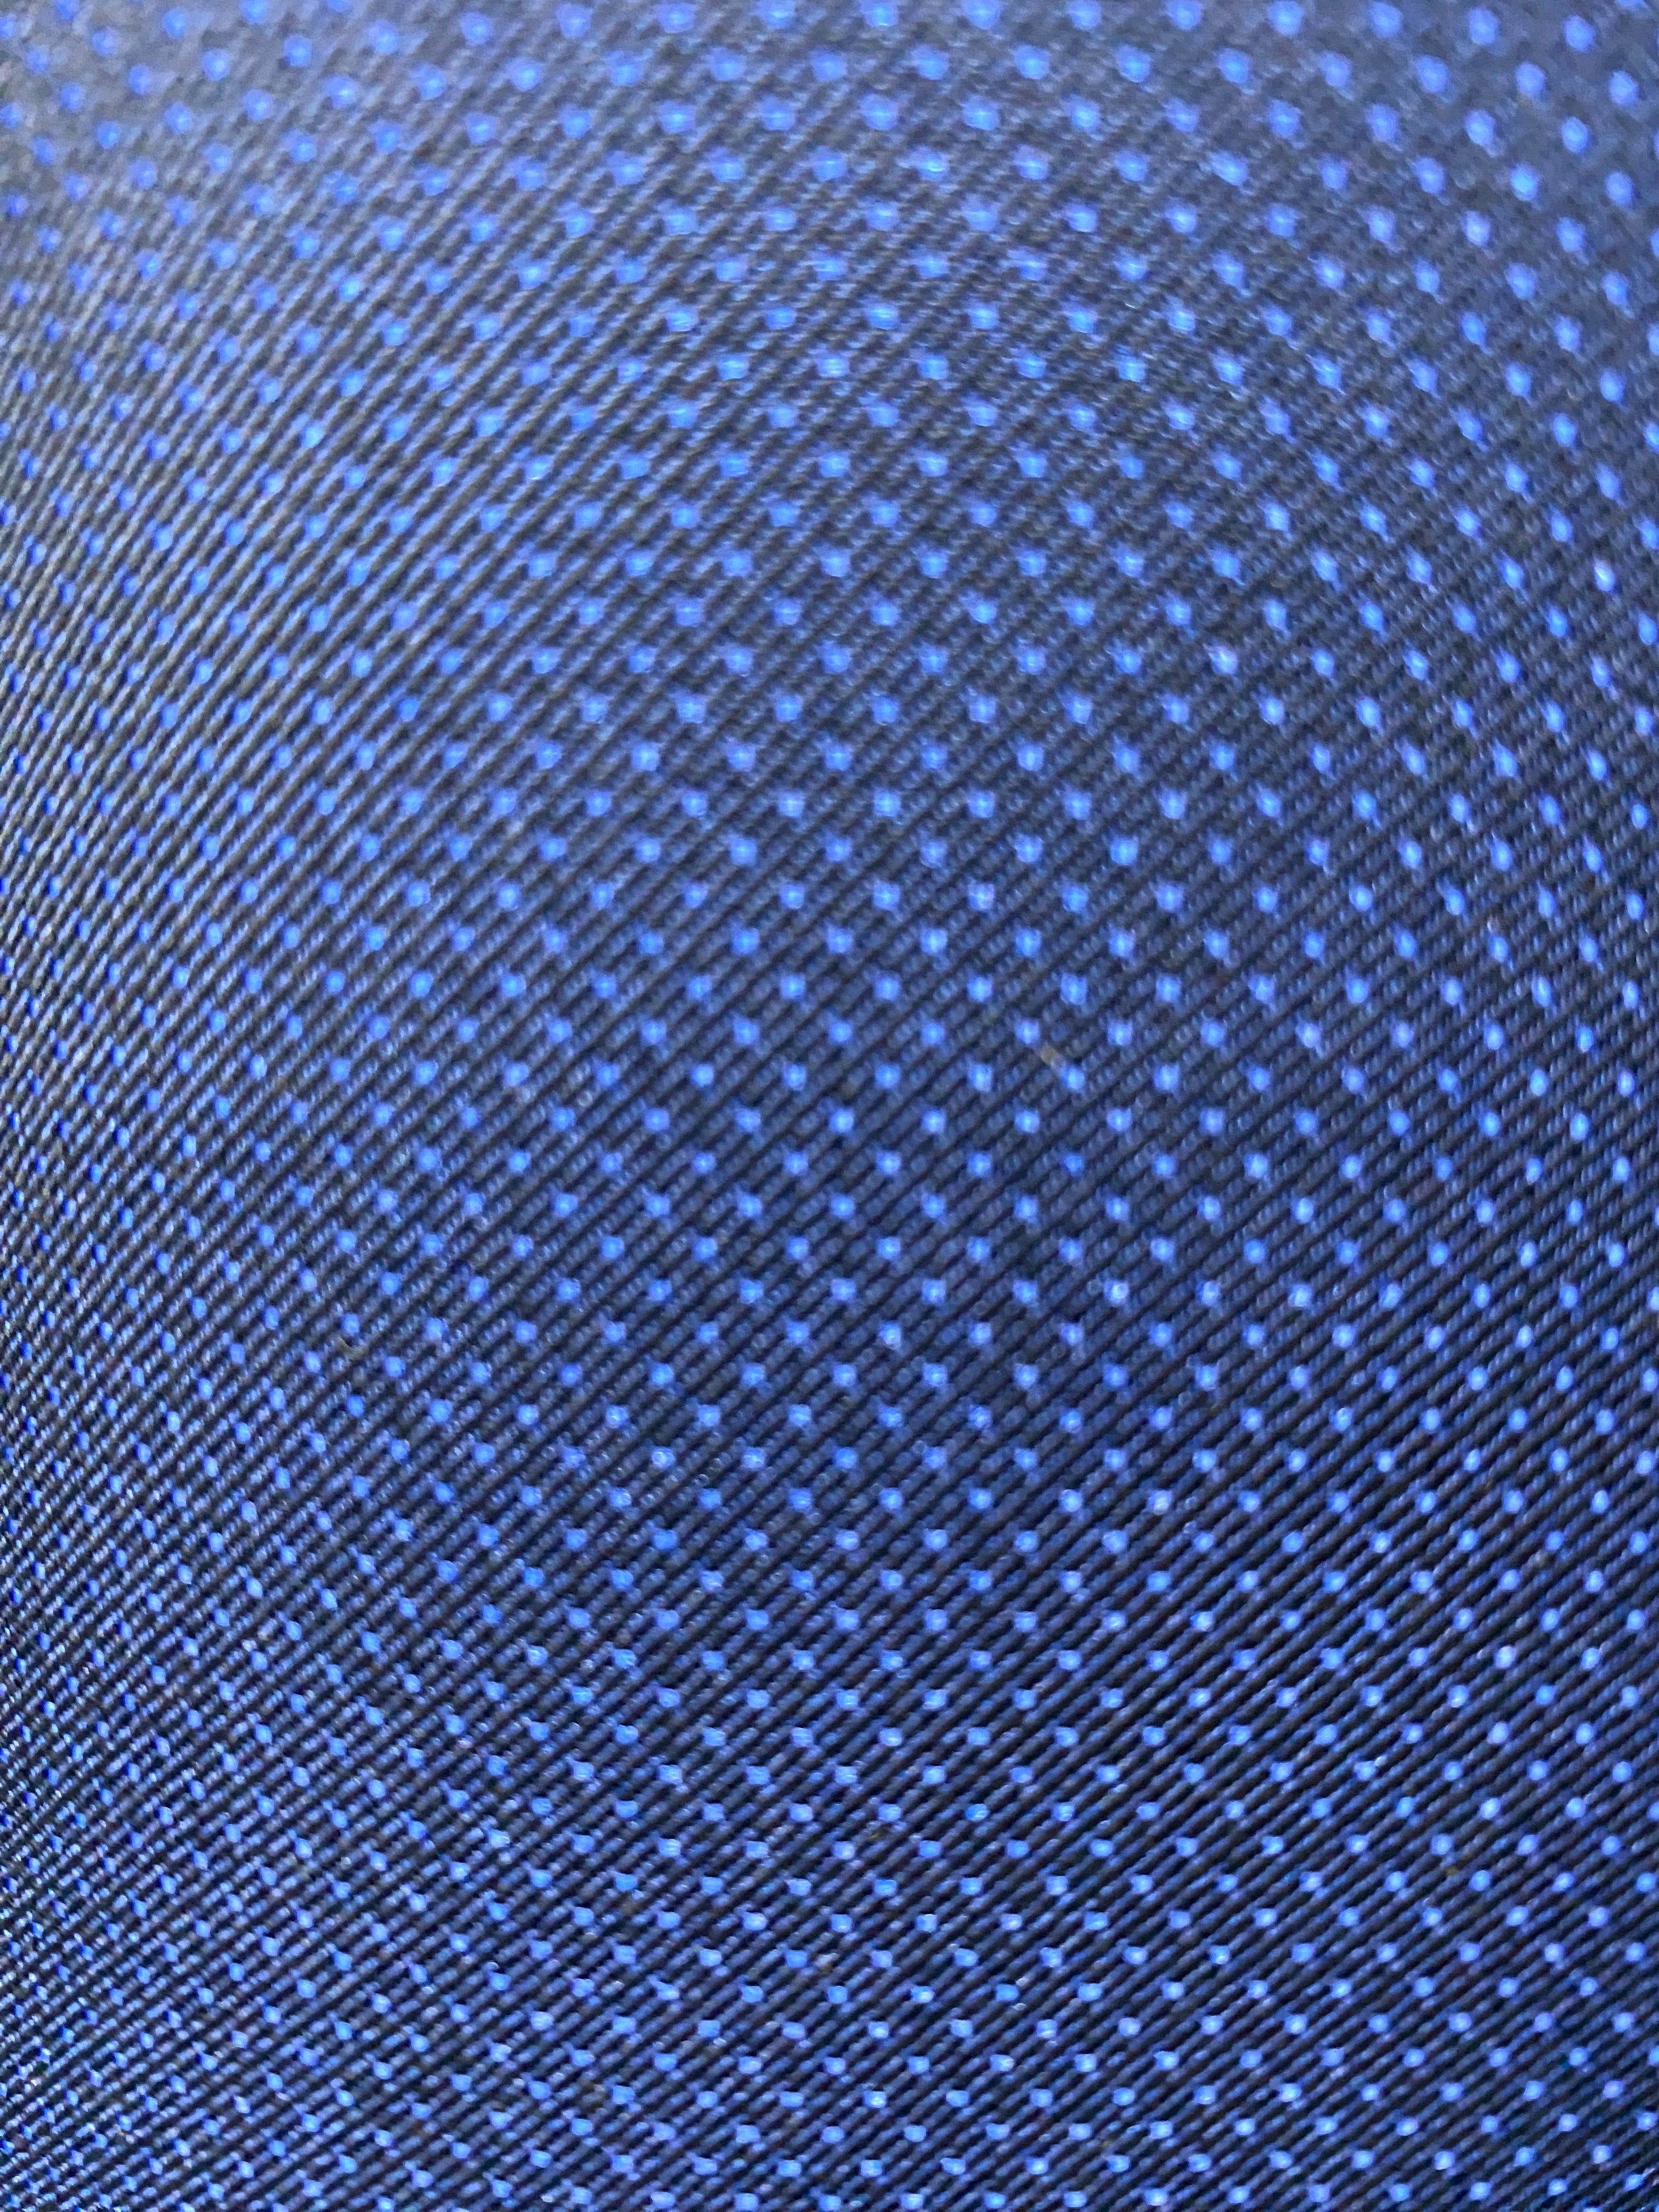 Modern Blue Pin Dot Tuxedo with Shawl Collar - Flat Front Pants